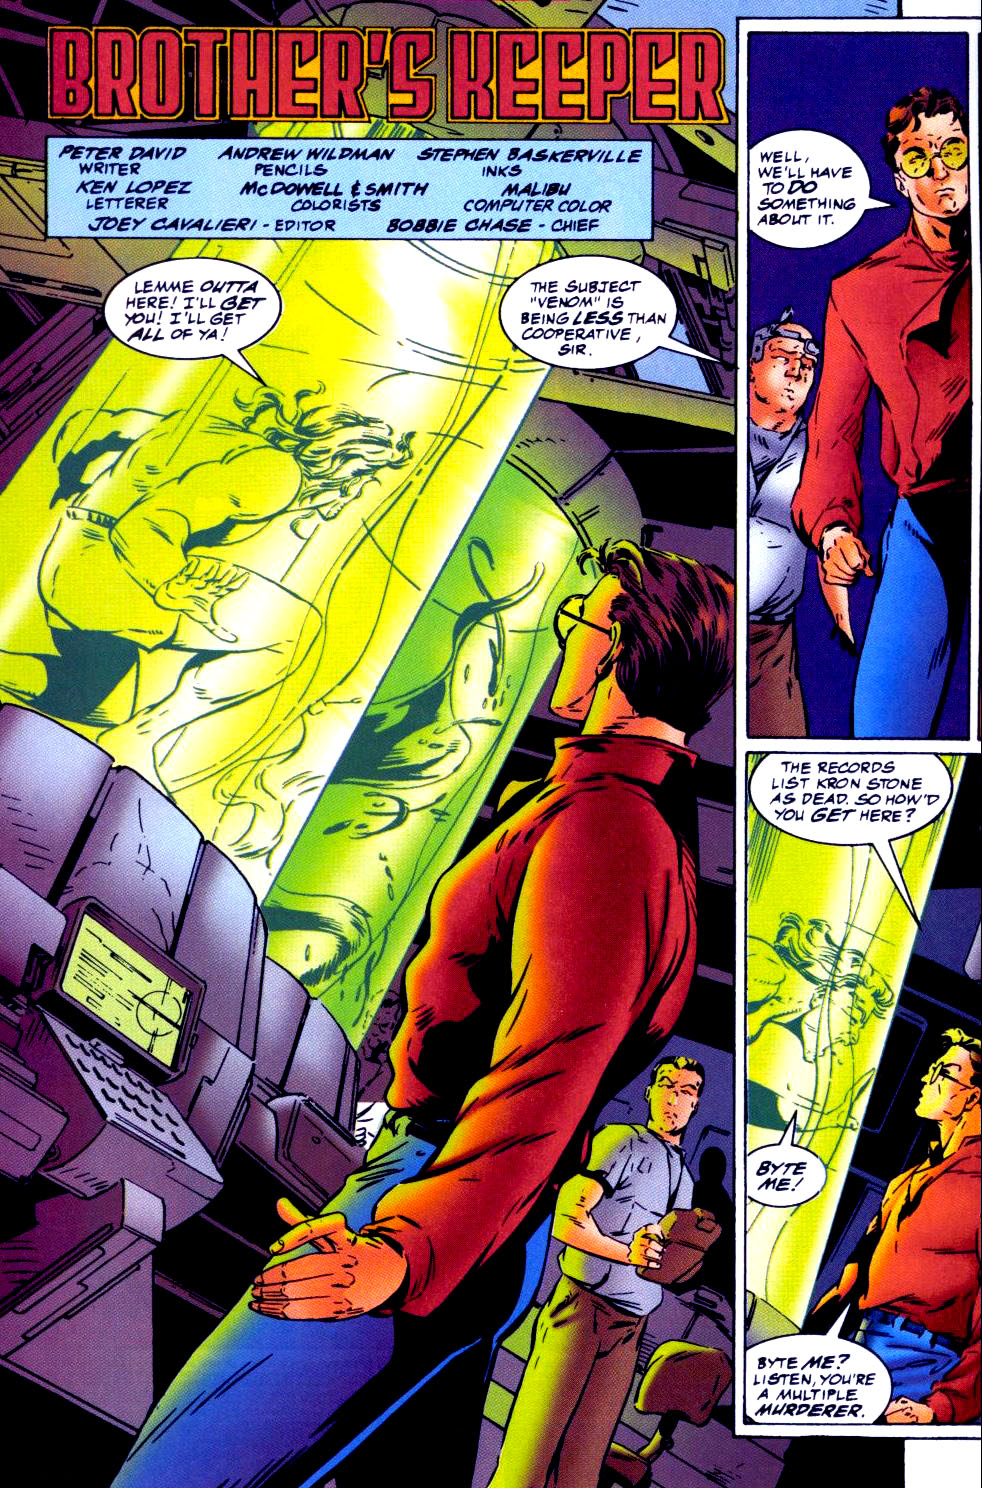 Spider-Man 2099 (1992) issue 39 - Page 3